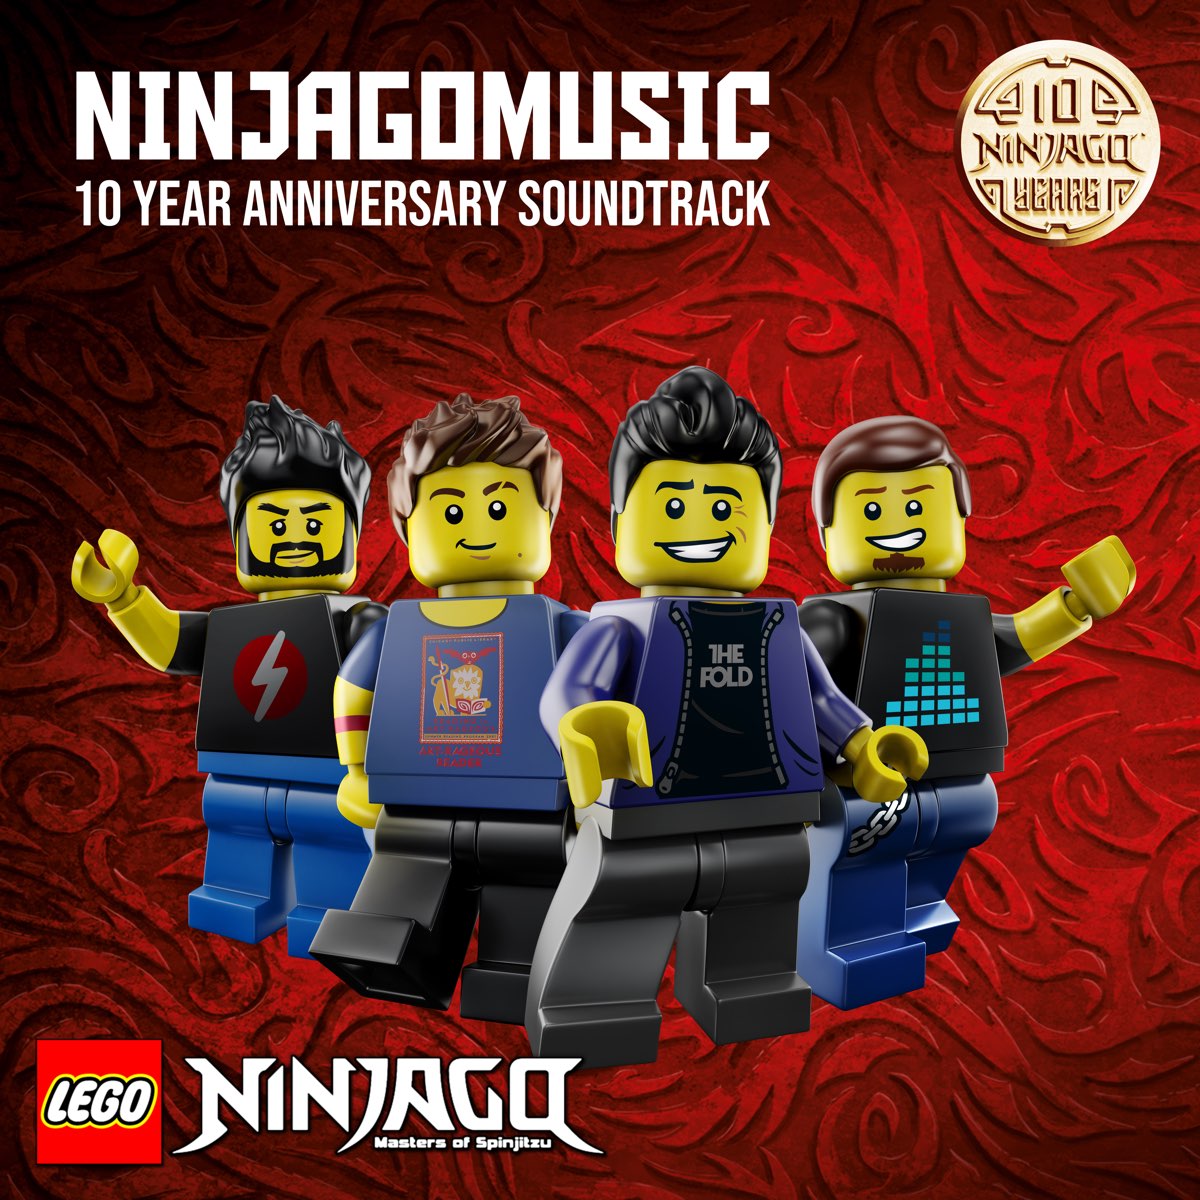 Lego Ninjago: 10 Year Anniversary Soundtrack by Ninjago Music & The Fold on  Apple Music